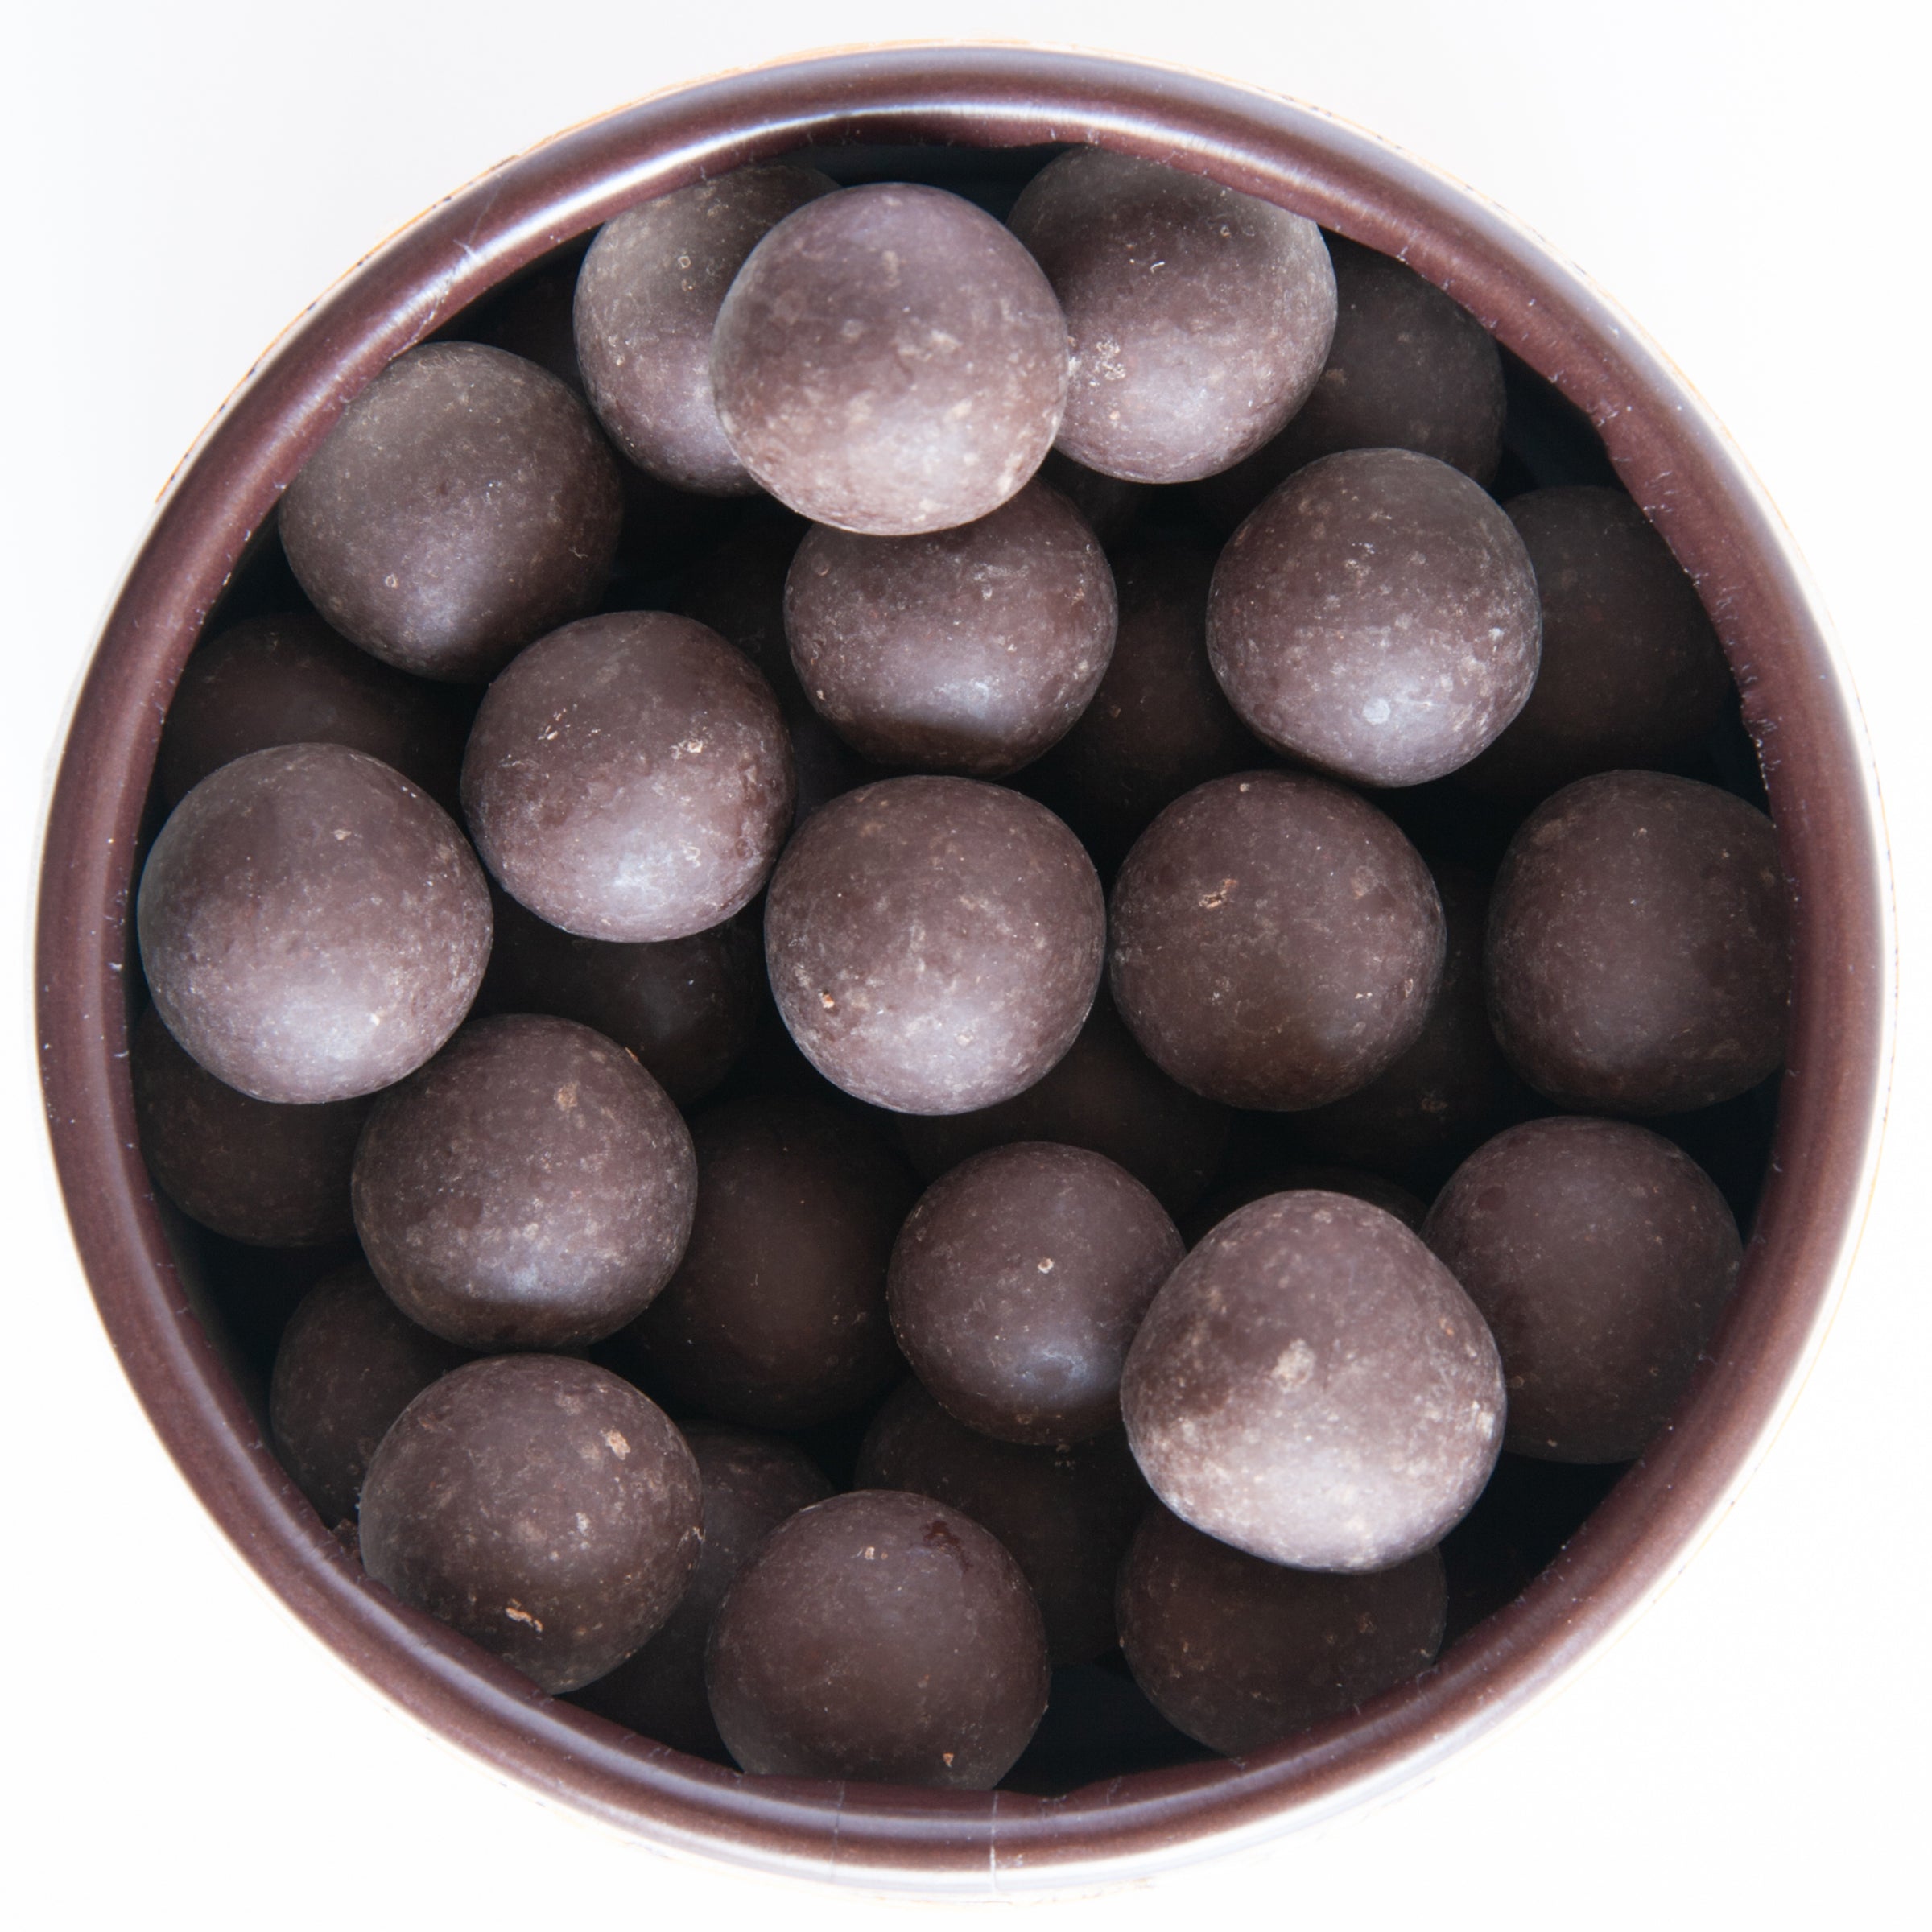 igourmet_10797_Dark Chocolate Sea Salt Caramels_Clif Family_Chocolate Specialties